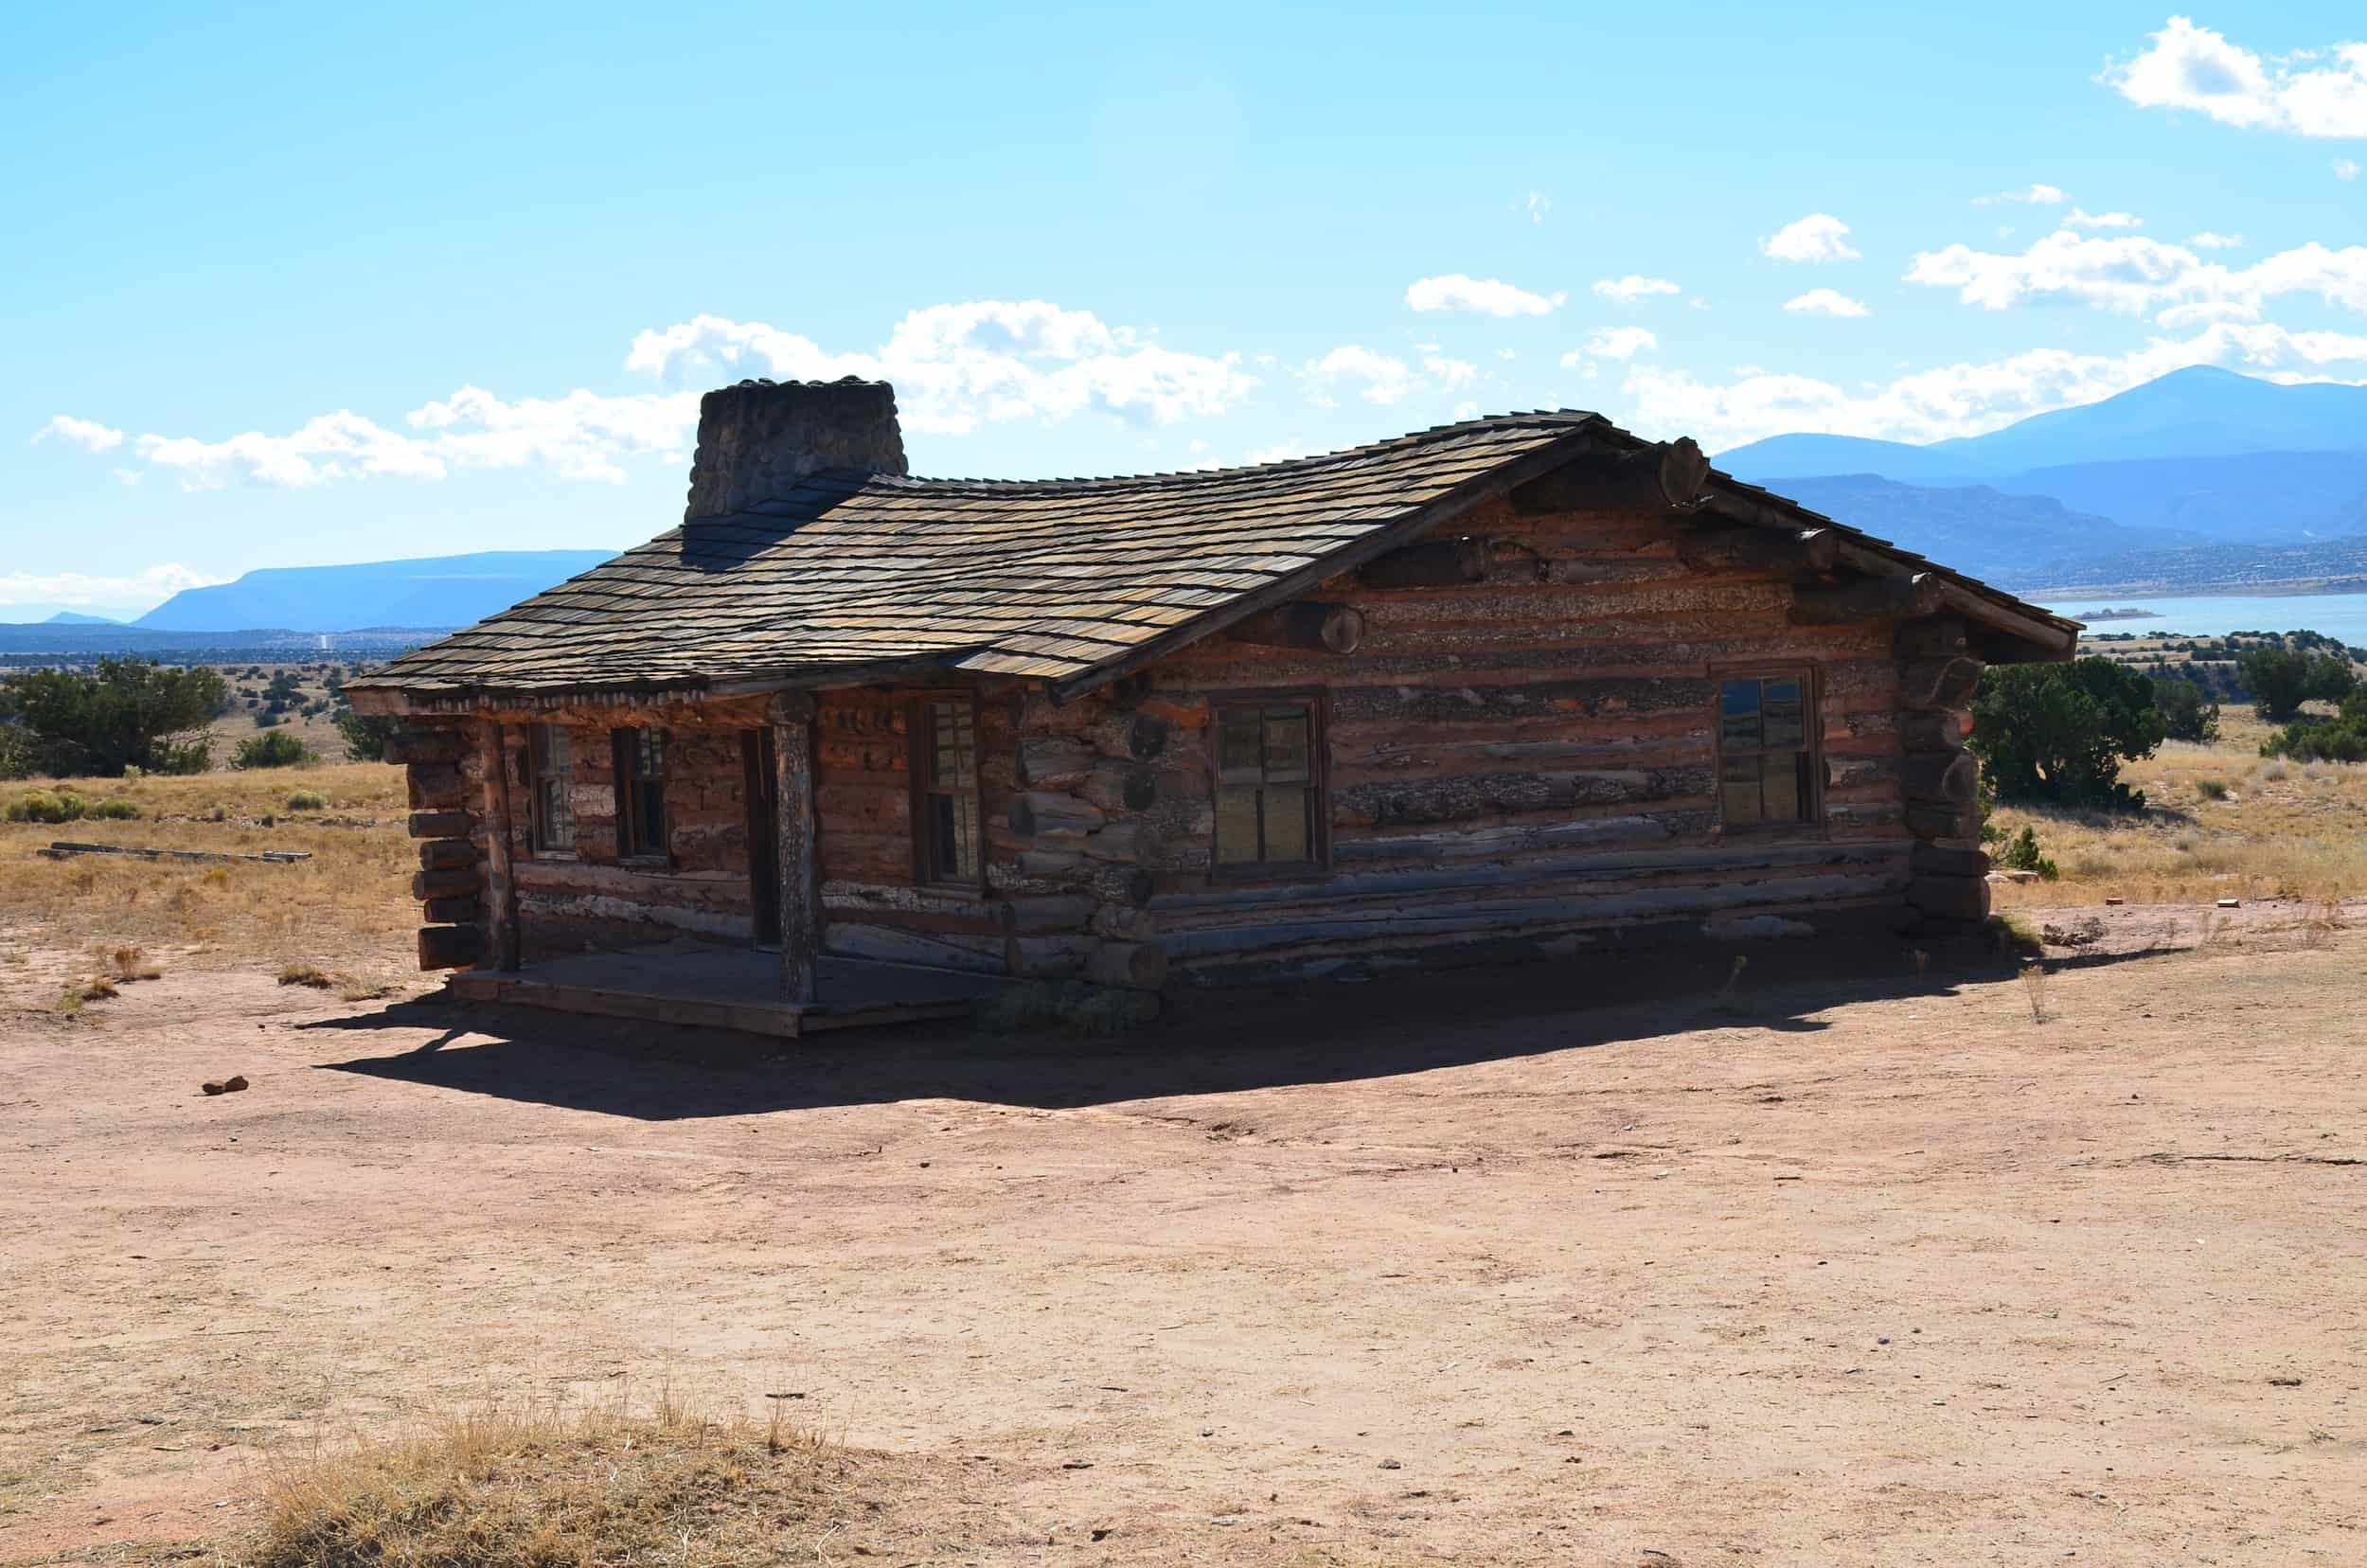 City Slickers cabin in Abiquiu, New Mexico